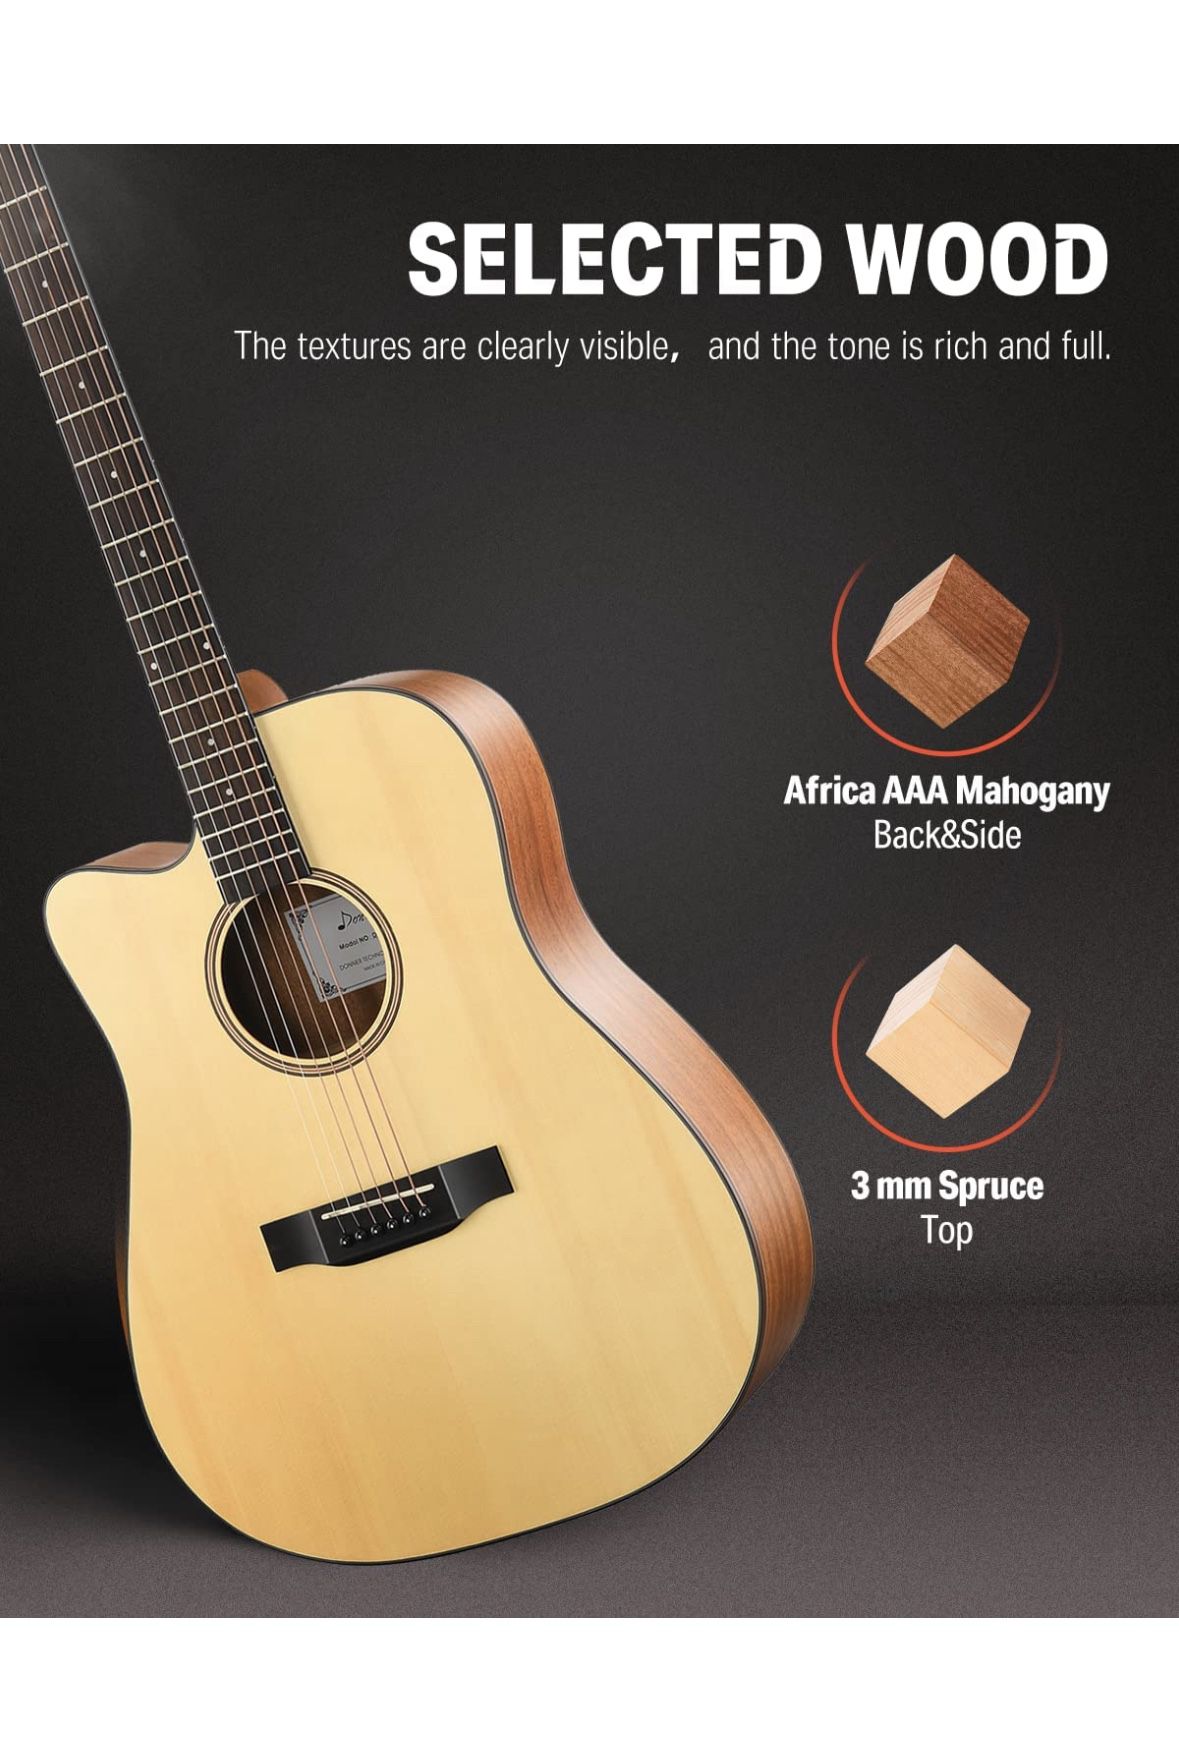 Brand New-Donner Left Handed  Guitar Kit for Adult Full Size Cutaway Lefty Acustica Guitarra Bundle Set ORIGINAL PRICE IS $175